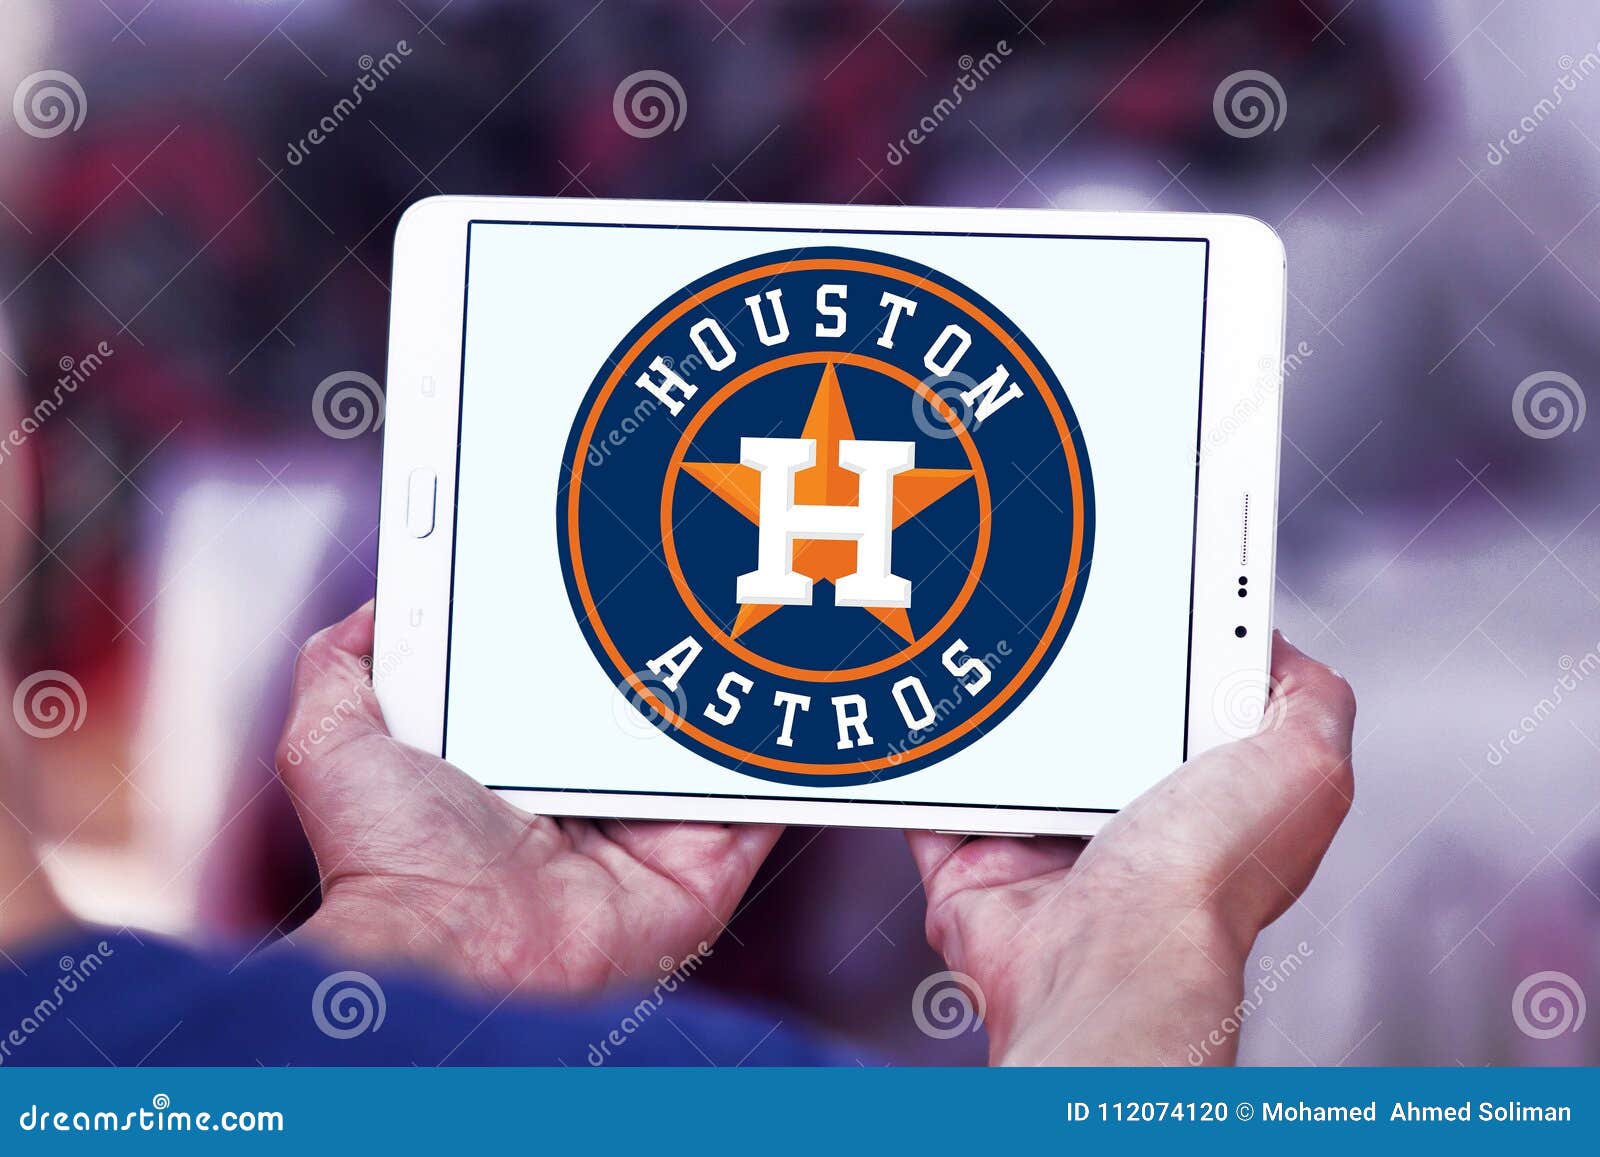 Houston Astros Baseball Team Logo Editorial Image - Image of